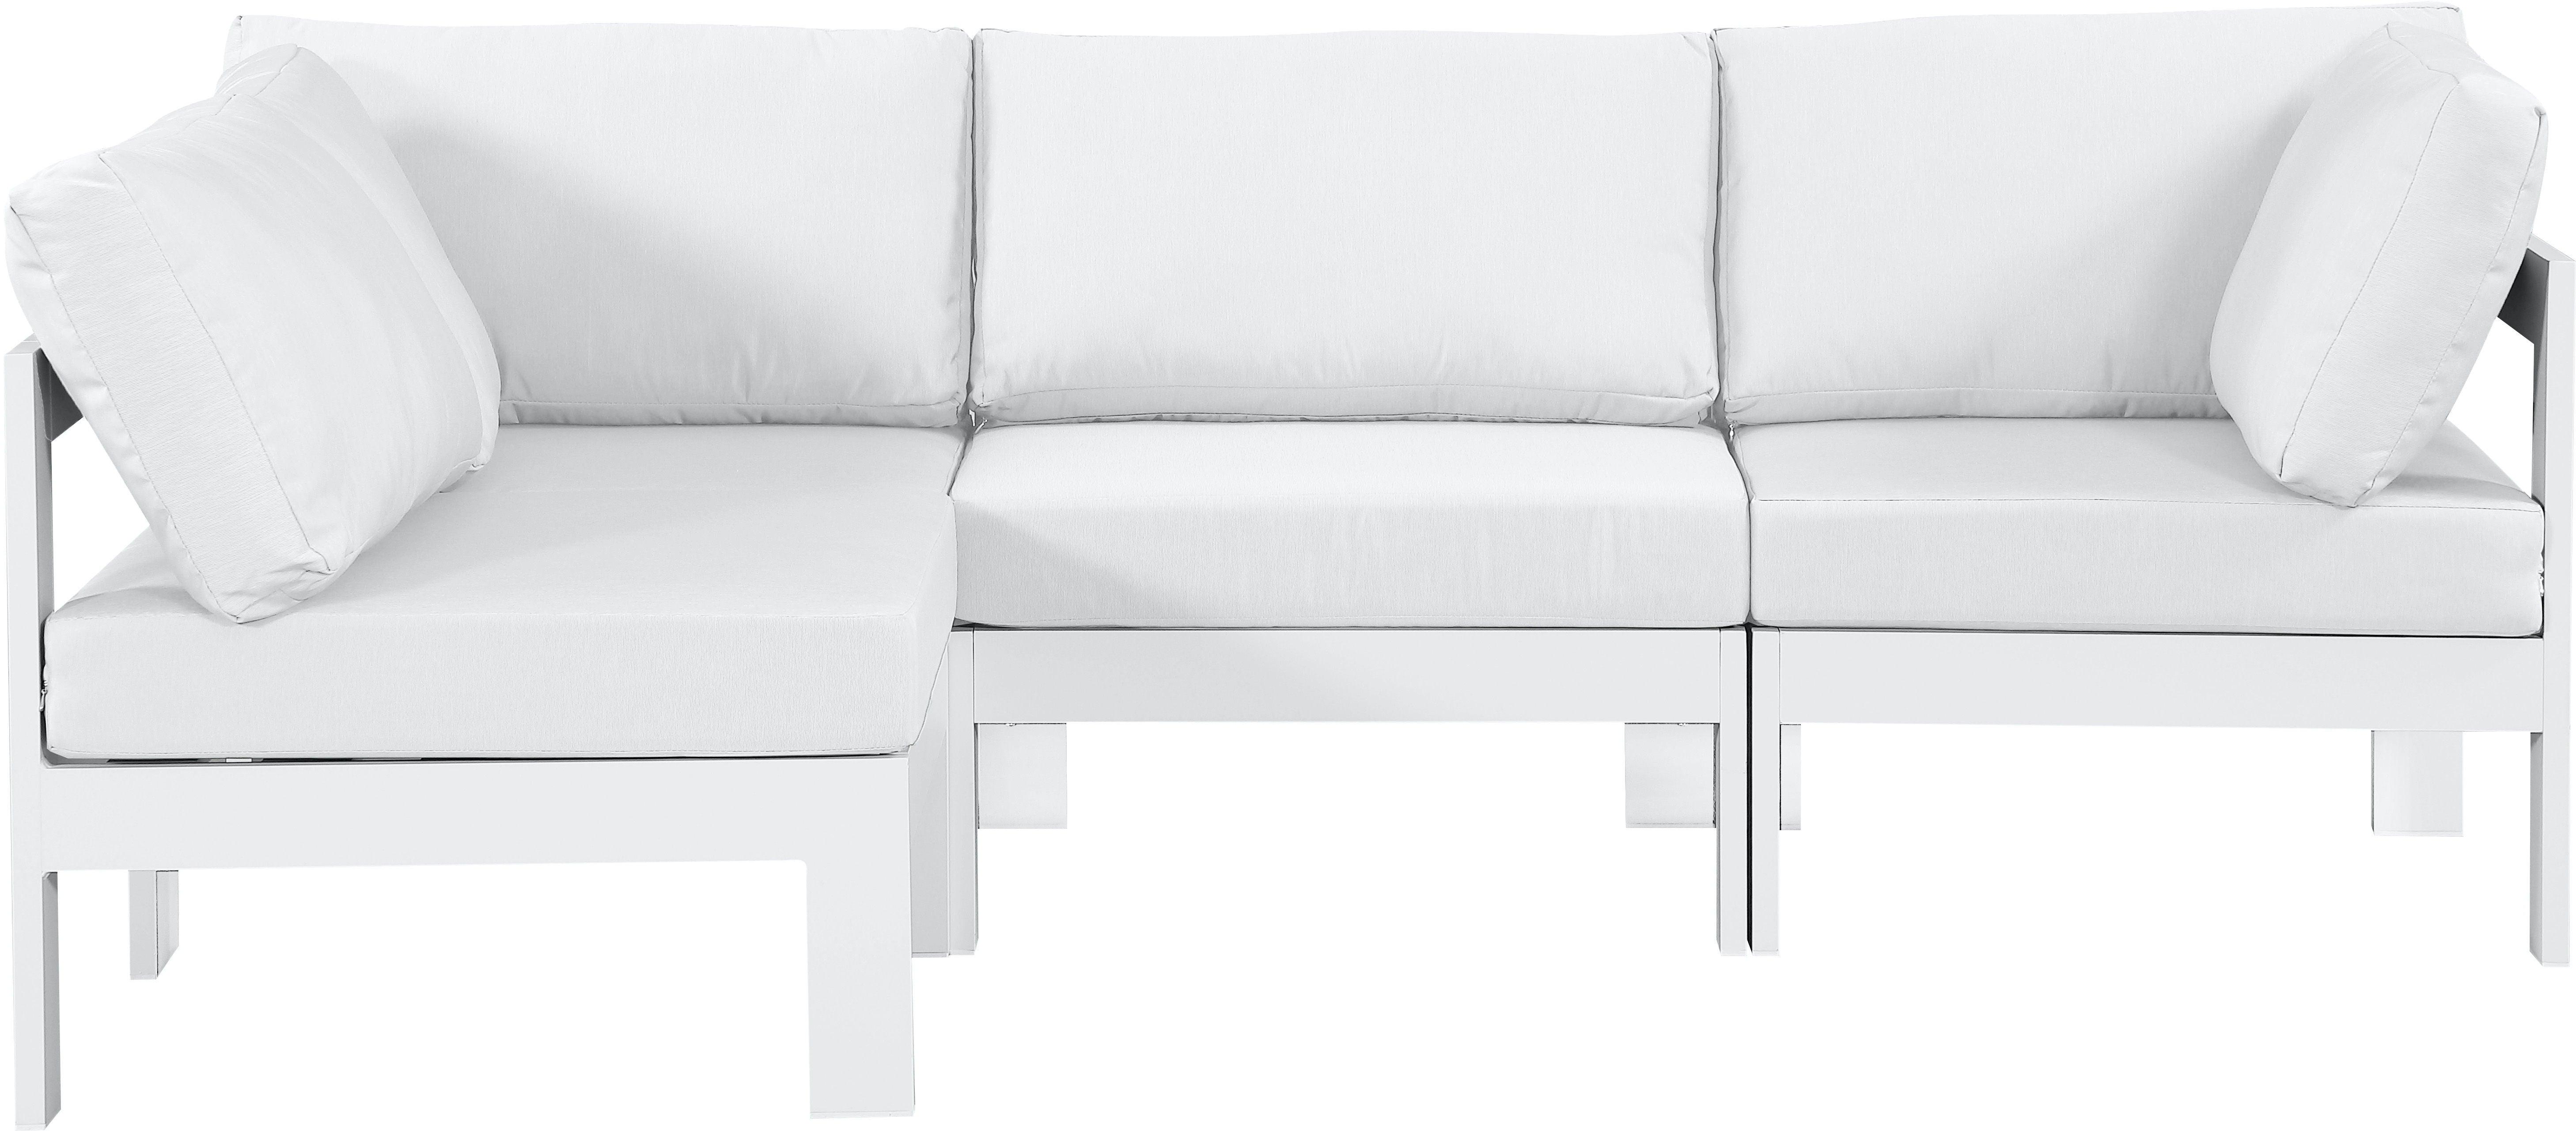 Meridian Furniture - Nizuc - Outdoor Patio Modular Sectional 4 Piece - White - 5th Avenue Furniture